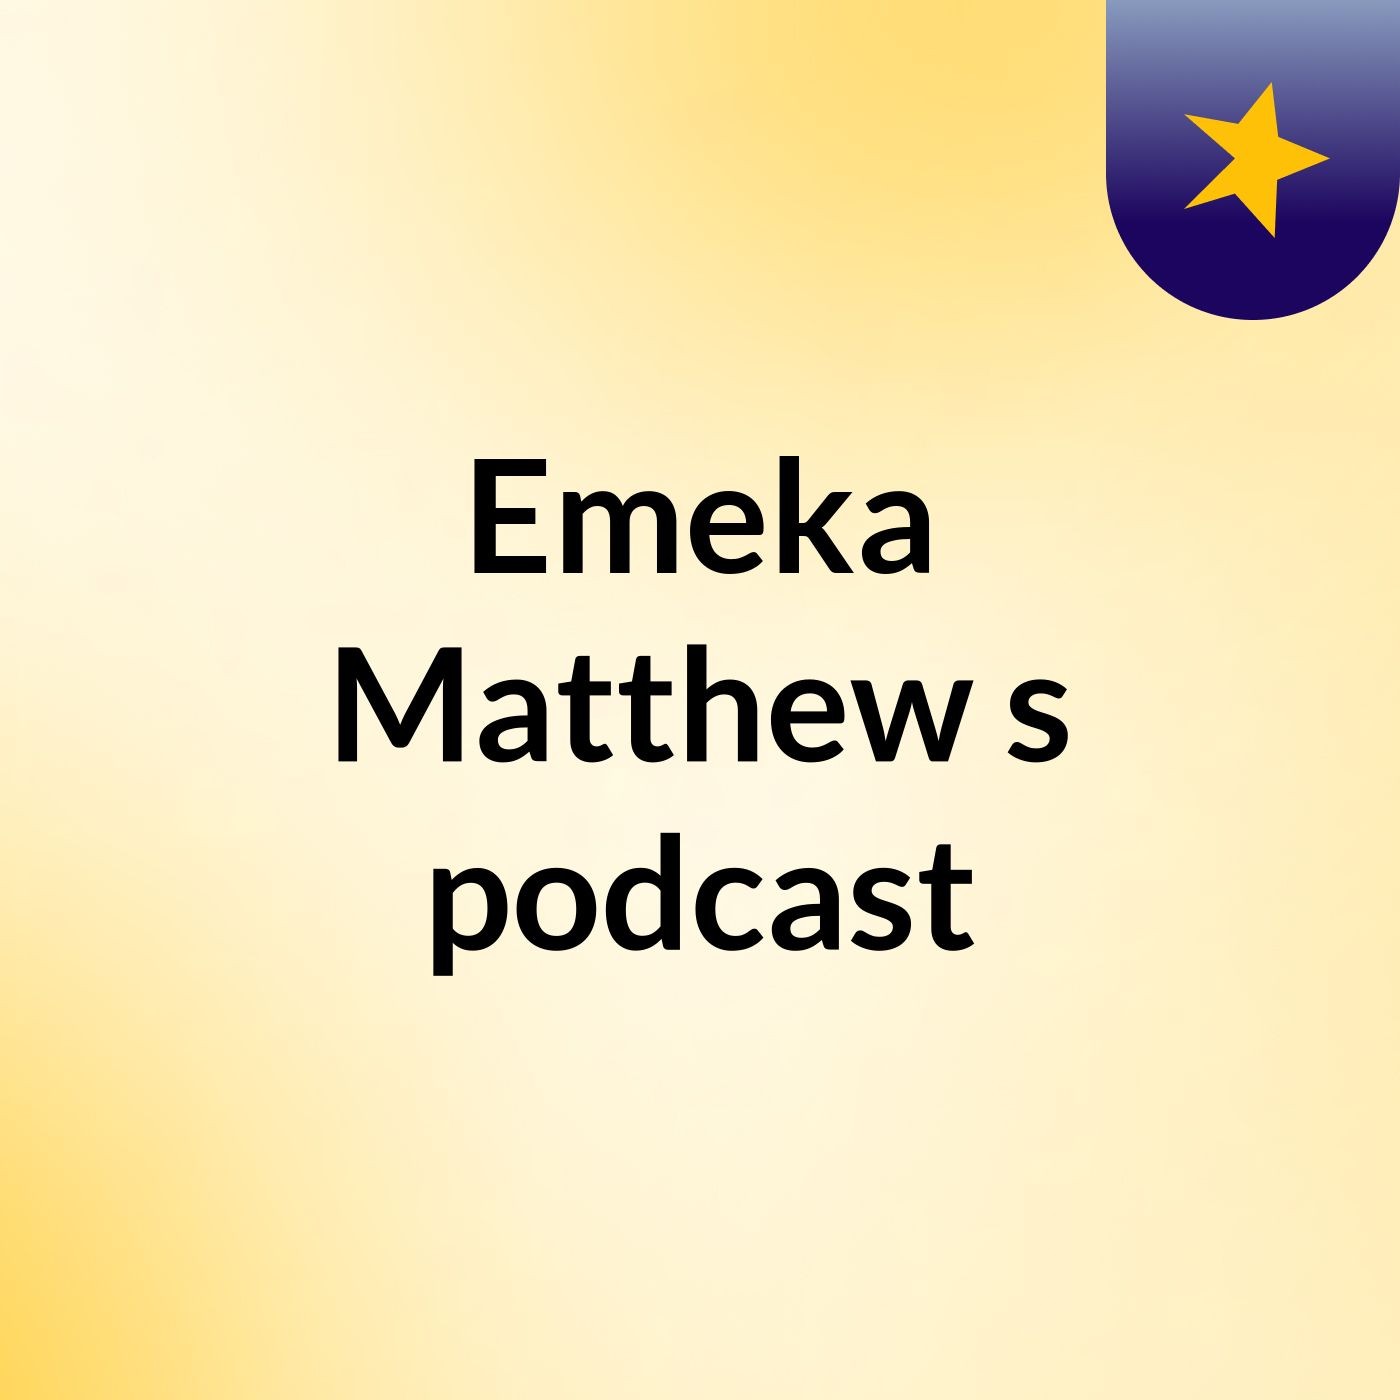 Emeka Matthew's podcast